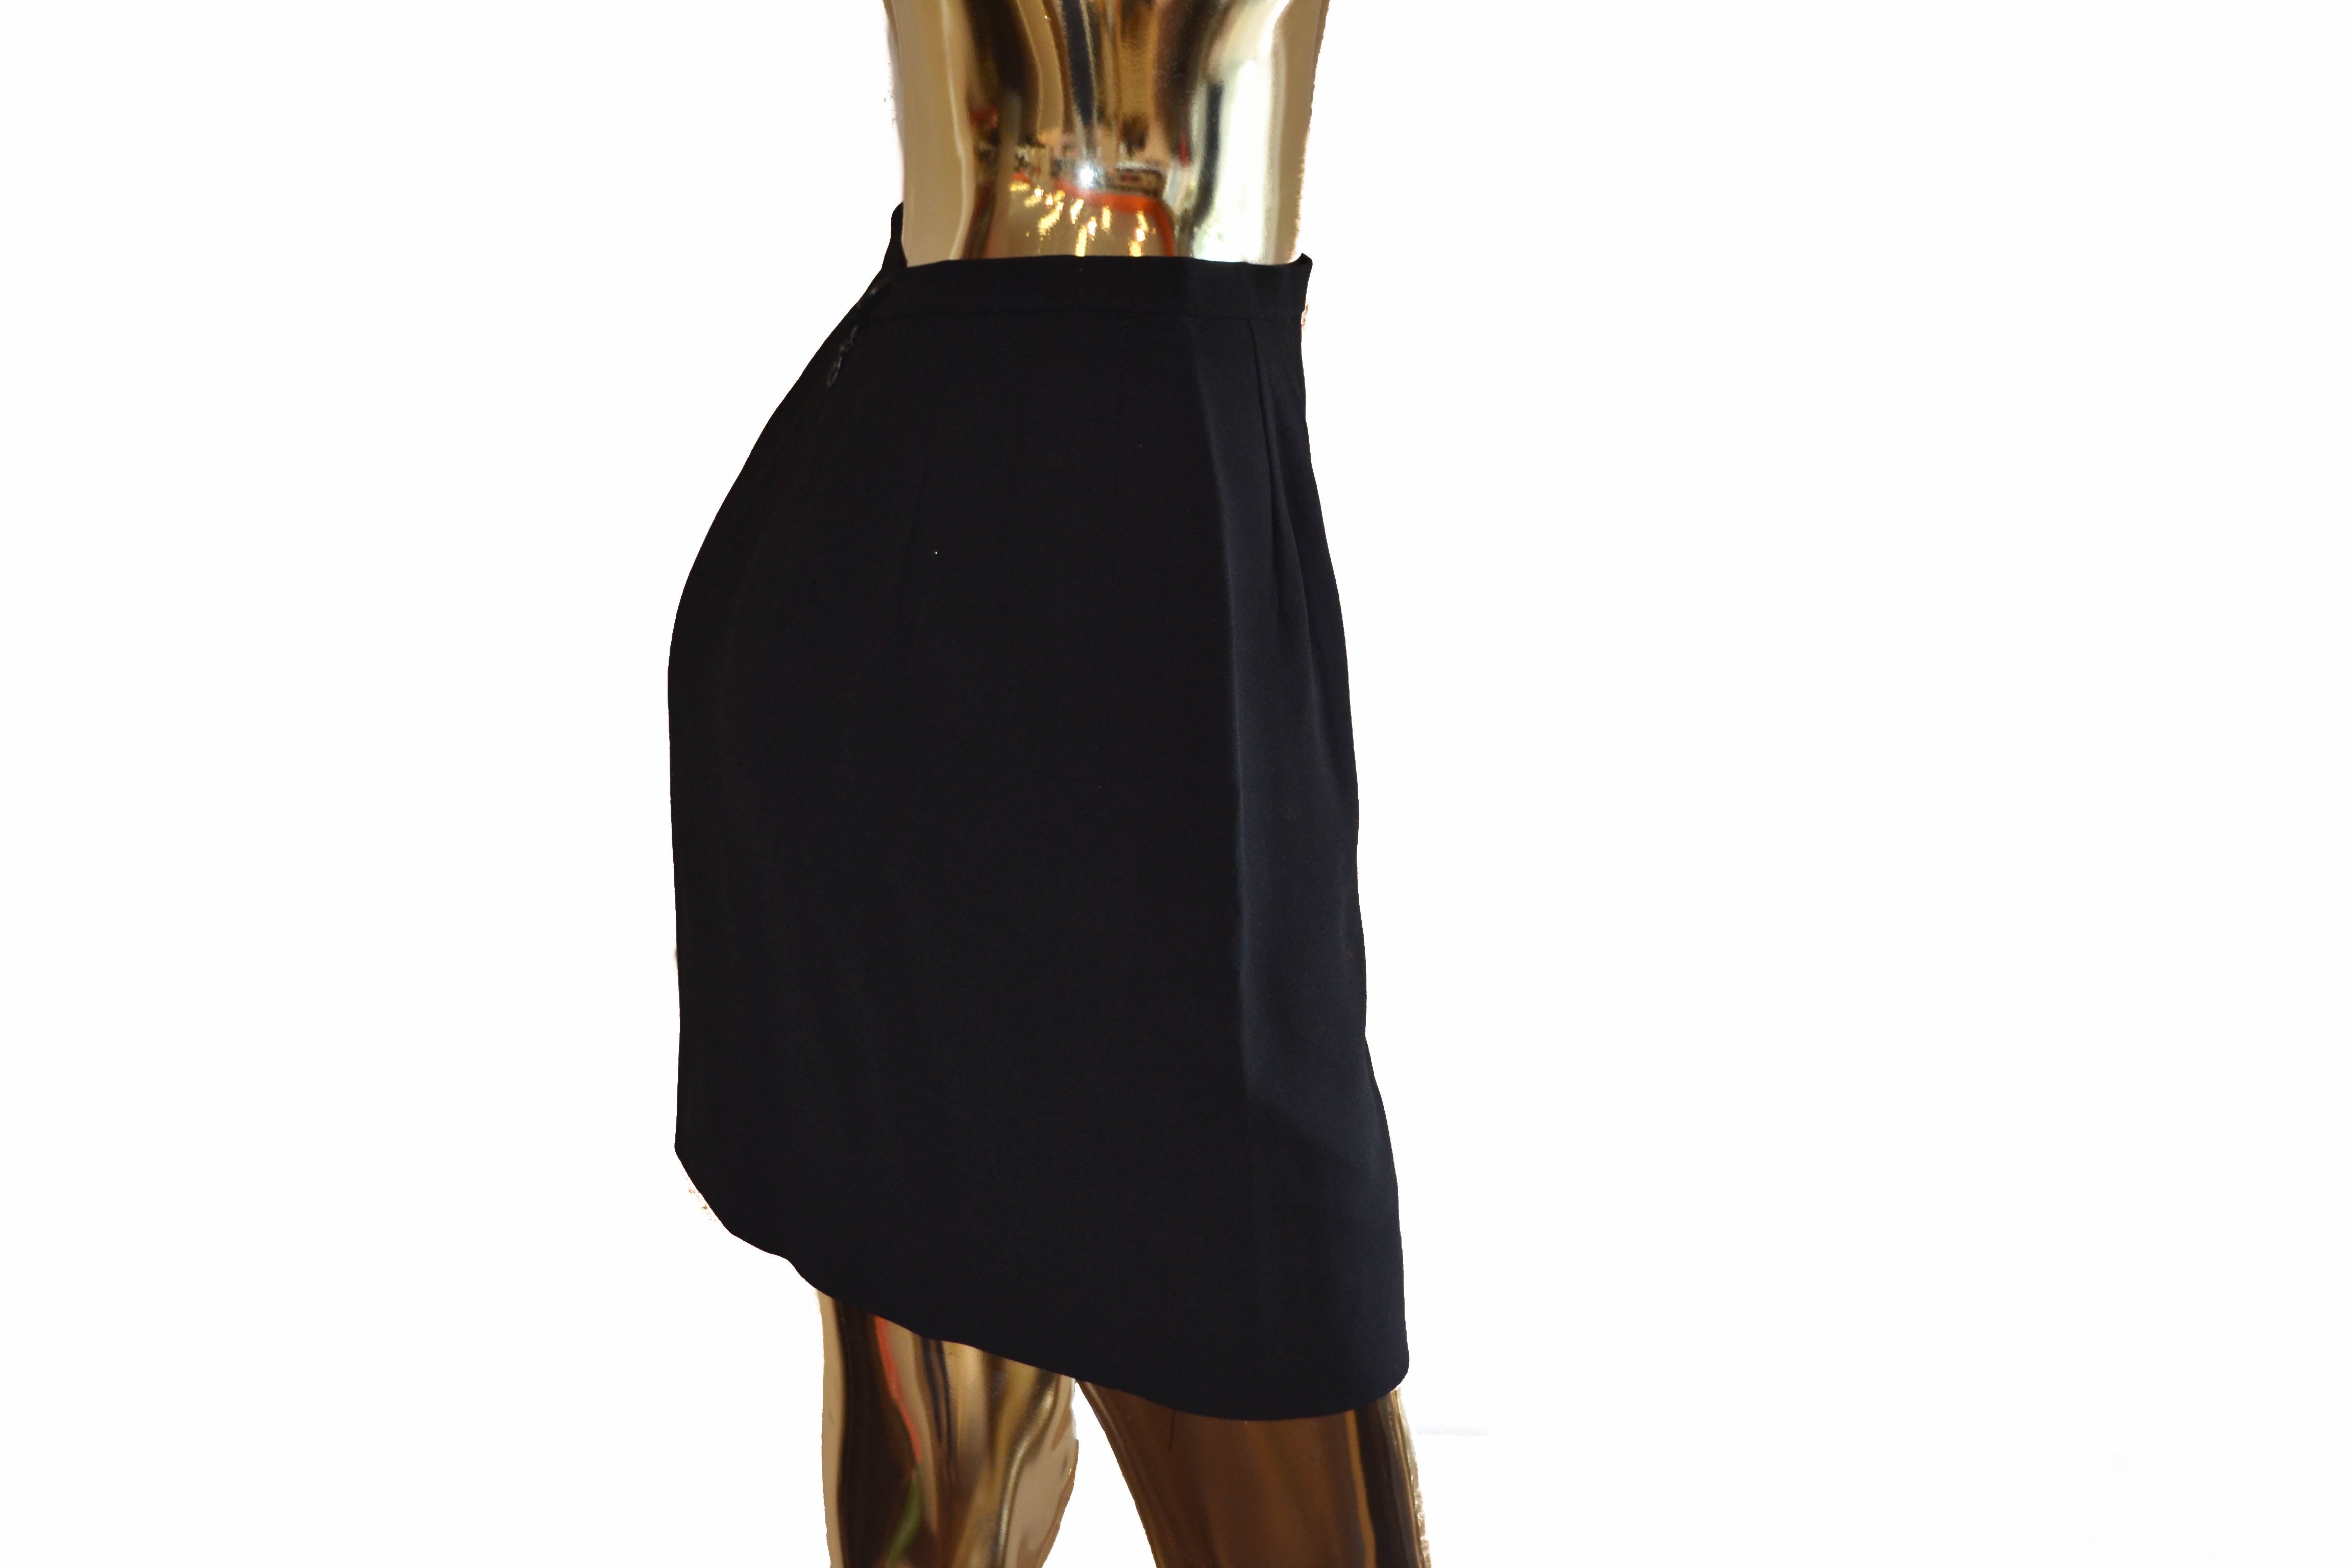 Authentic Celine Black Mini Skirt Size 40